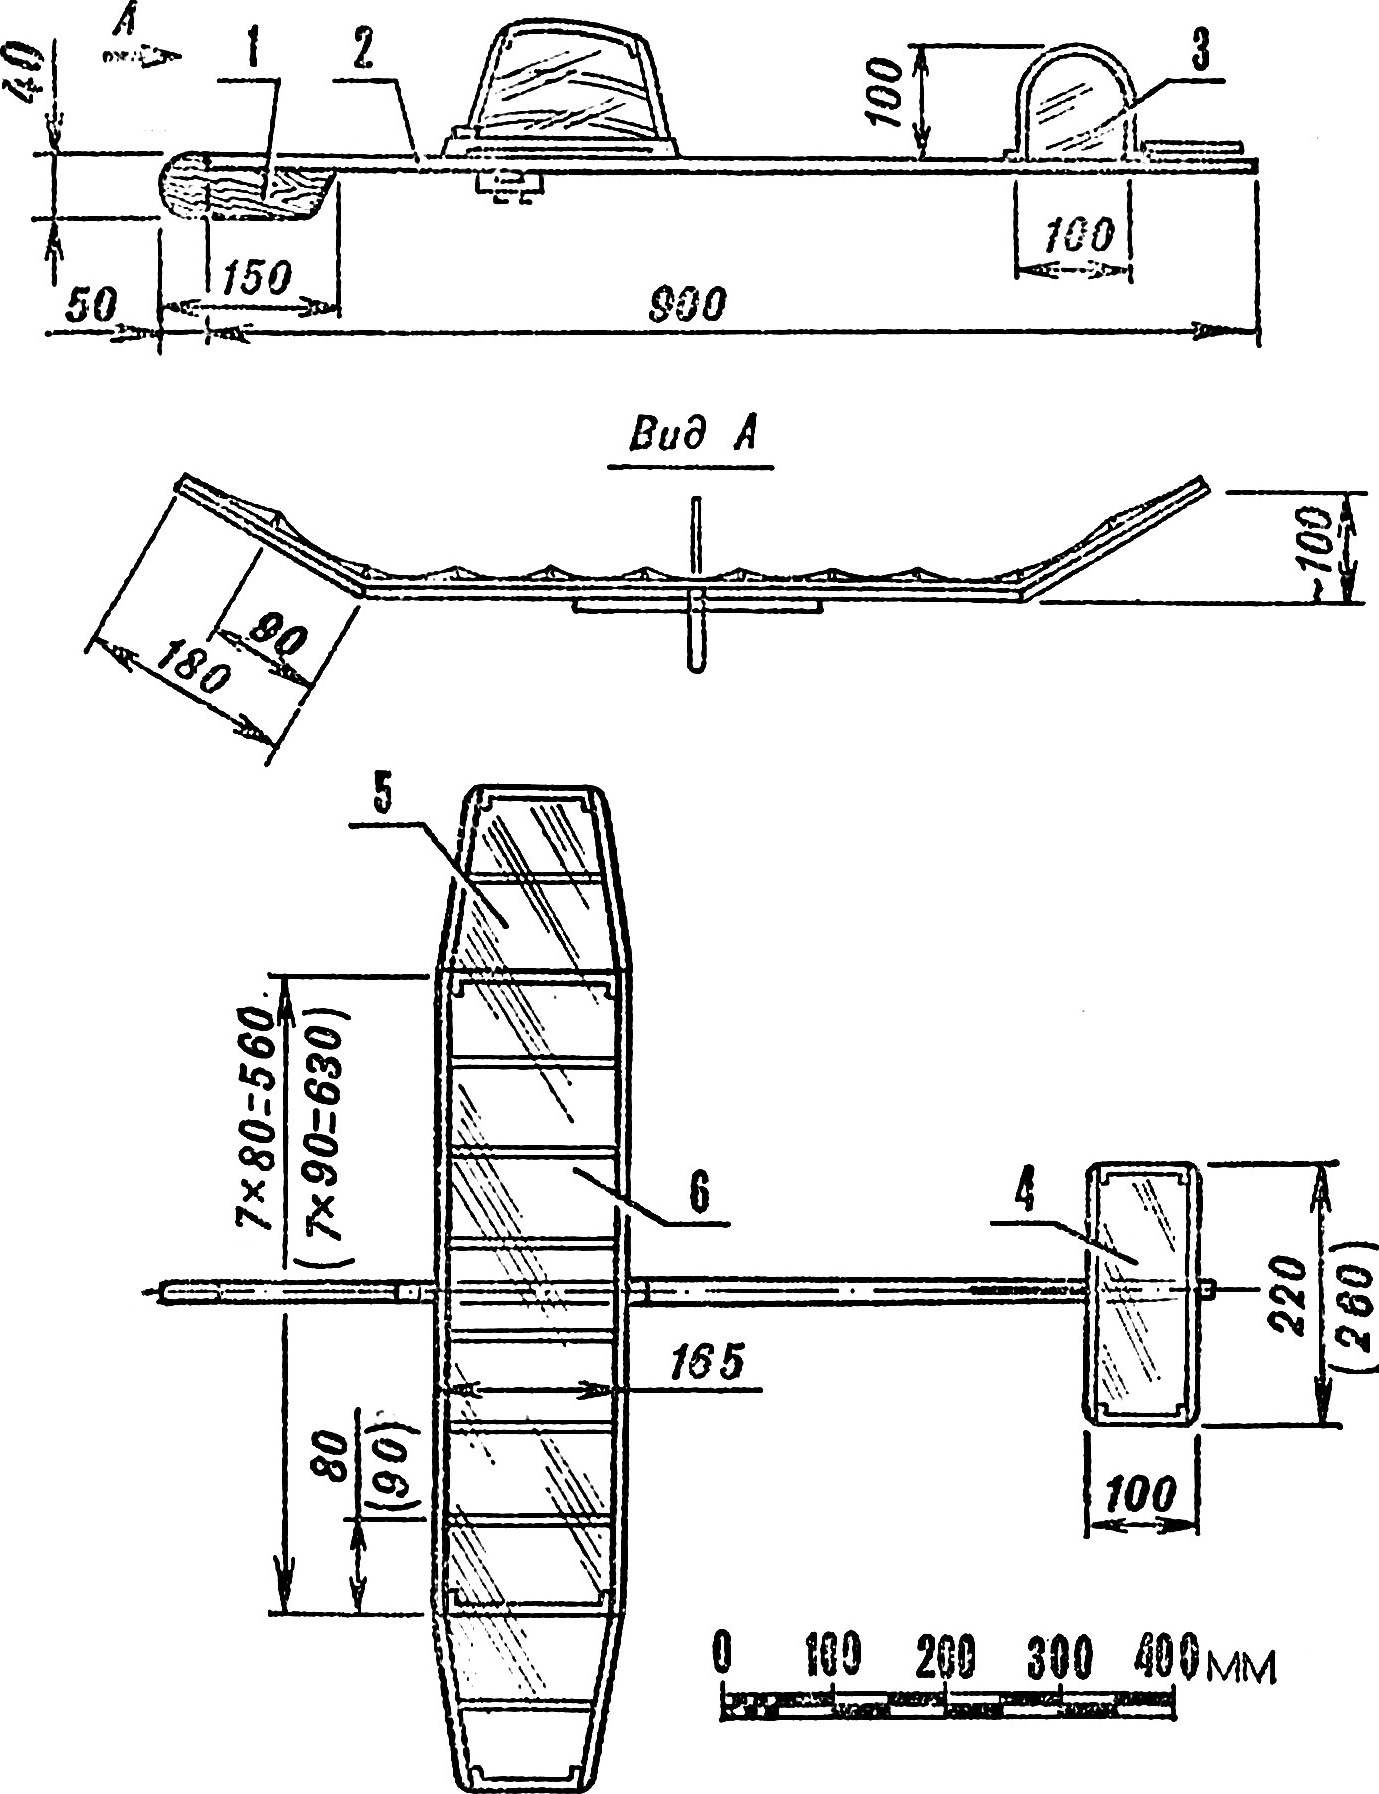 A schematic model of a glider.